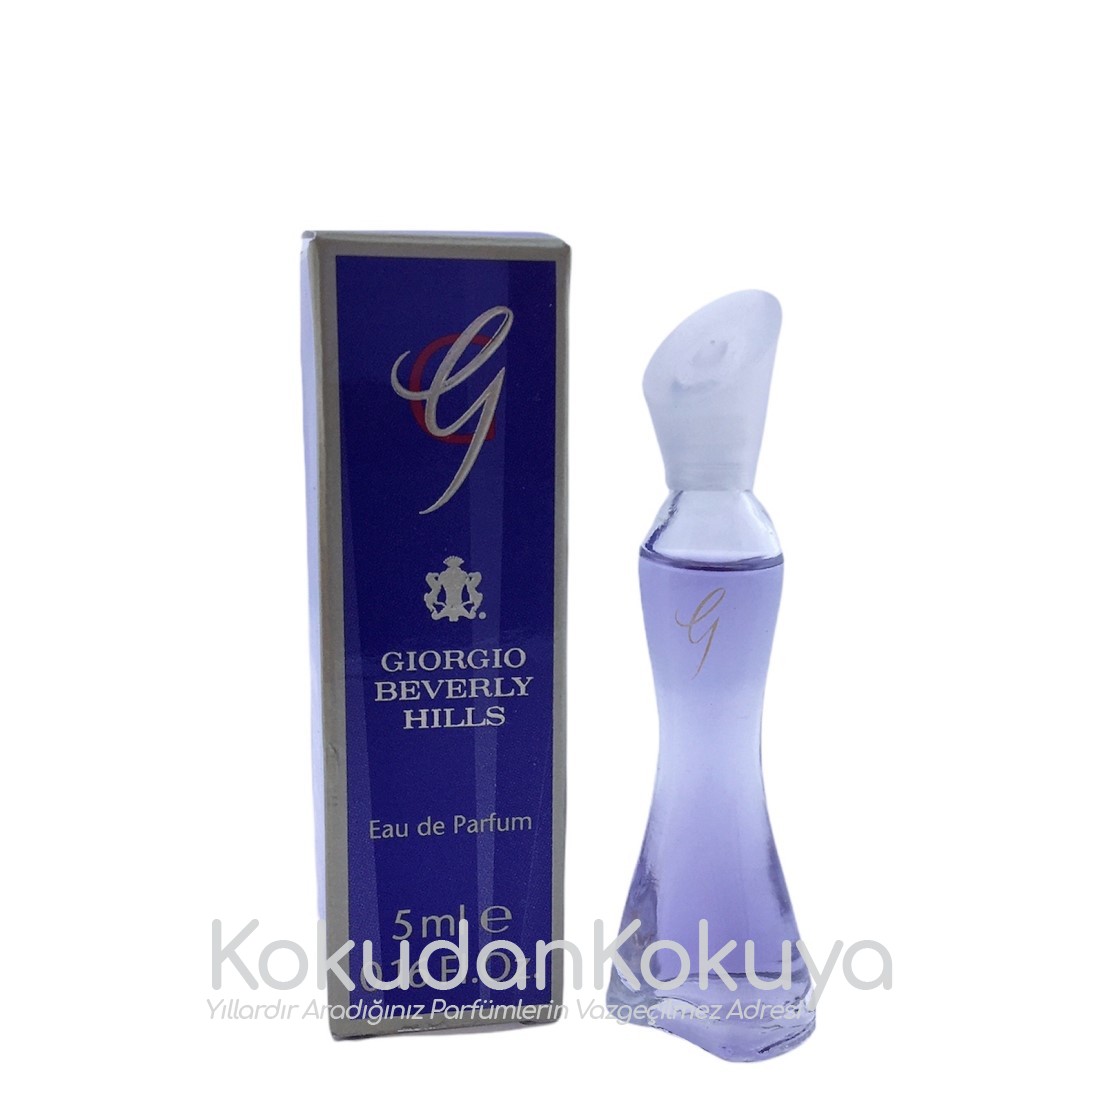 GIORGIO BEVERLY HILLS G (Vintage) Parfüm Kadın 5ml Minyatür (Mini Perfume) Dökme 